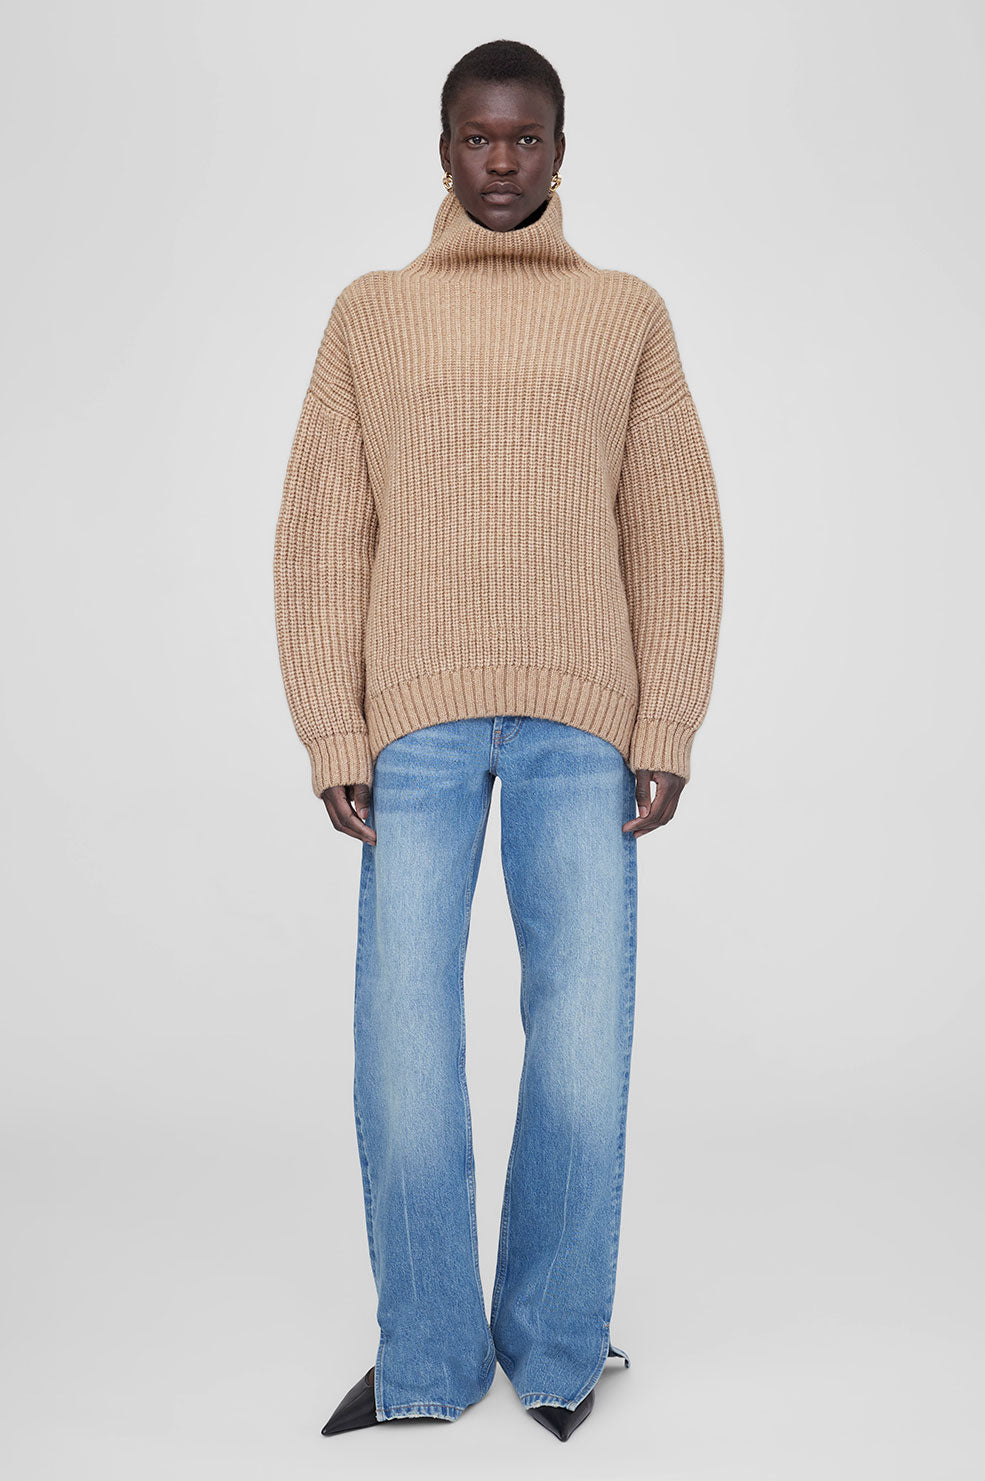 ANINE BING Sydney Sweater - Camel - On Model Front